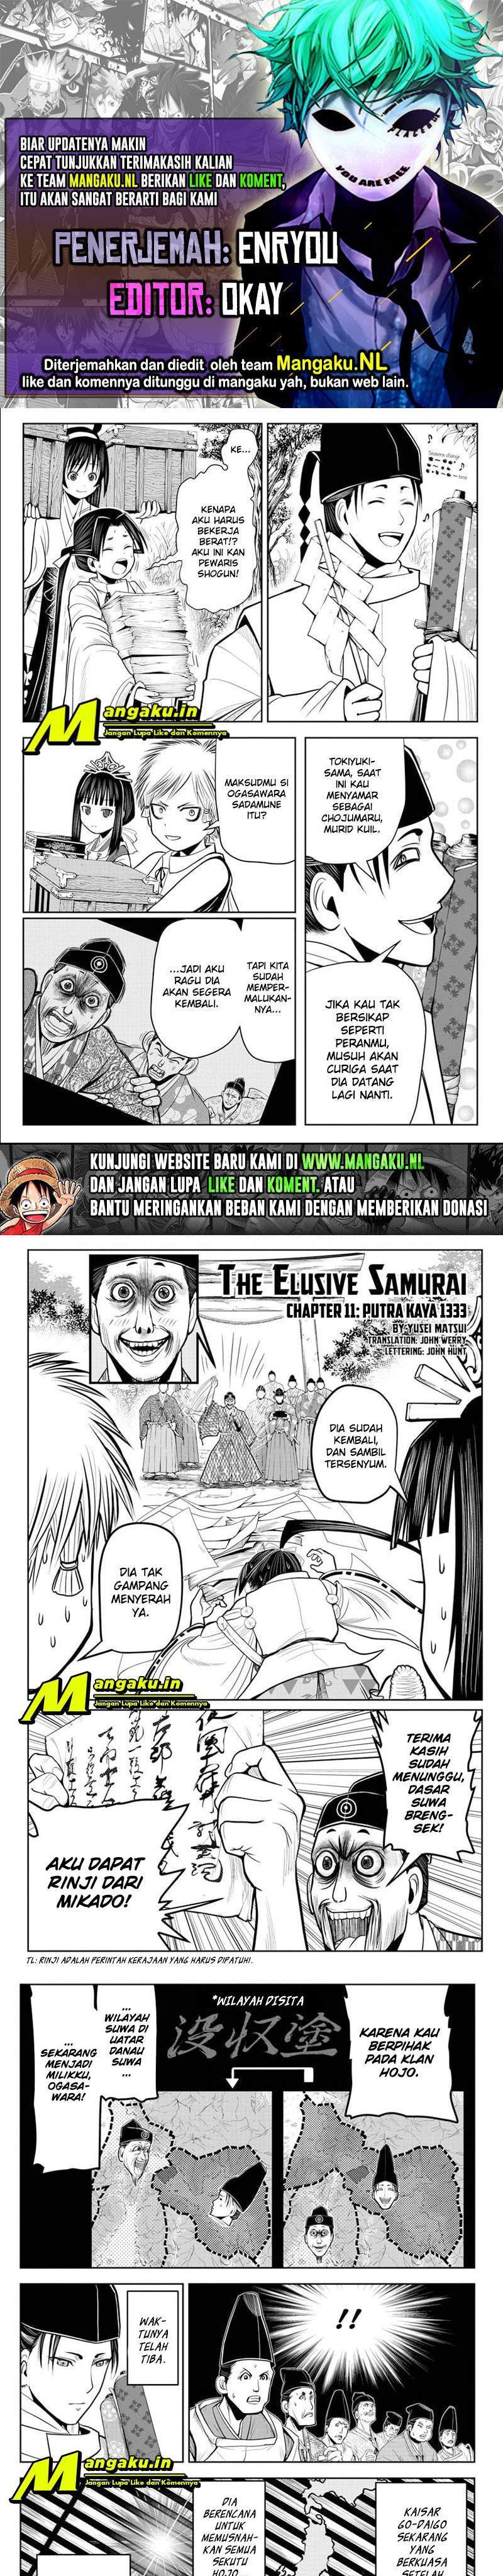 The Elusive Samurai Chapter 11 1